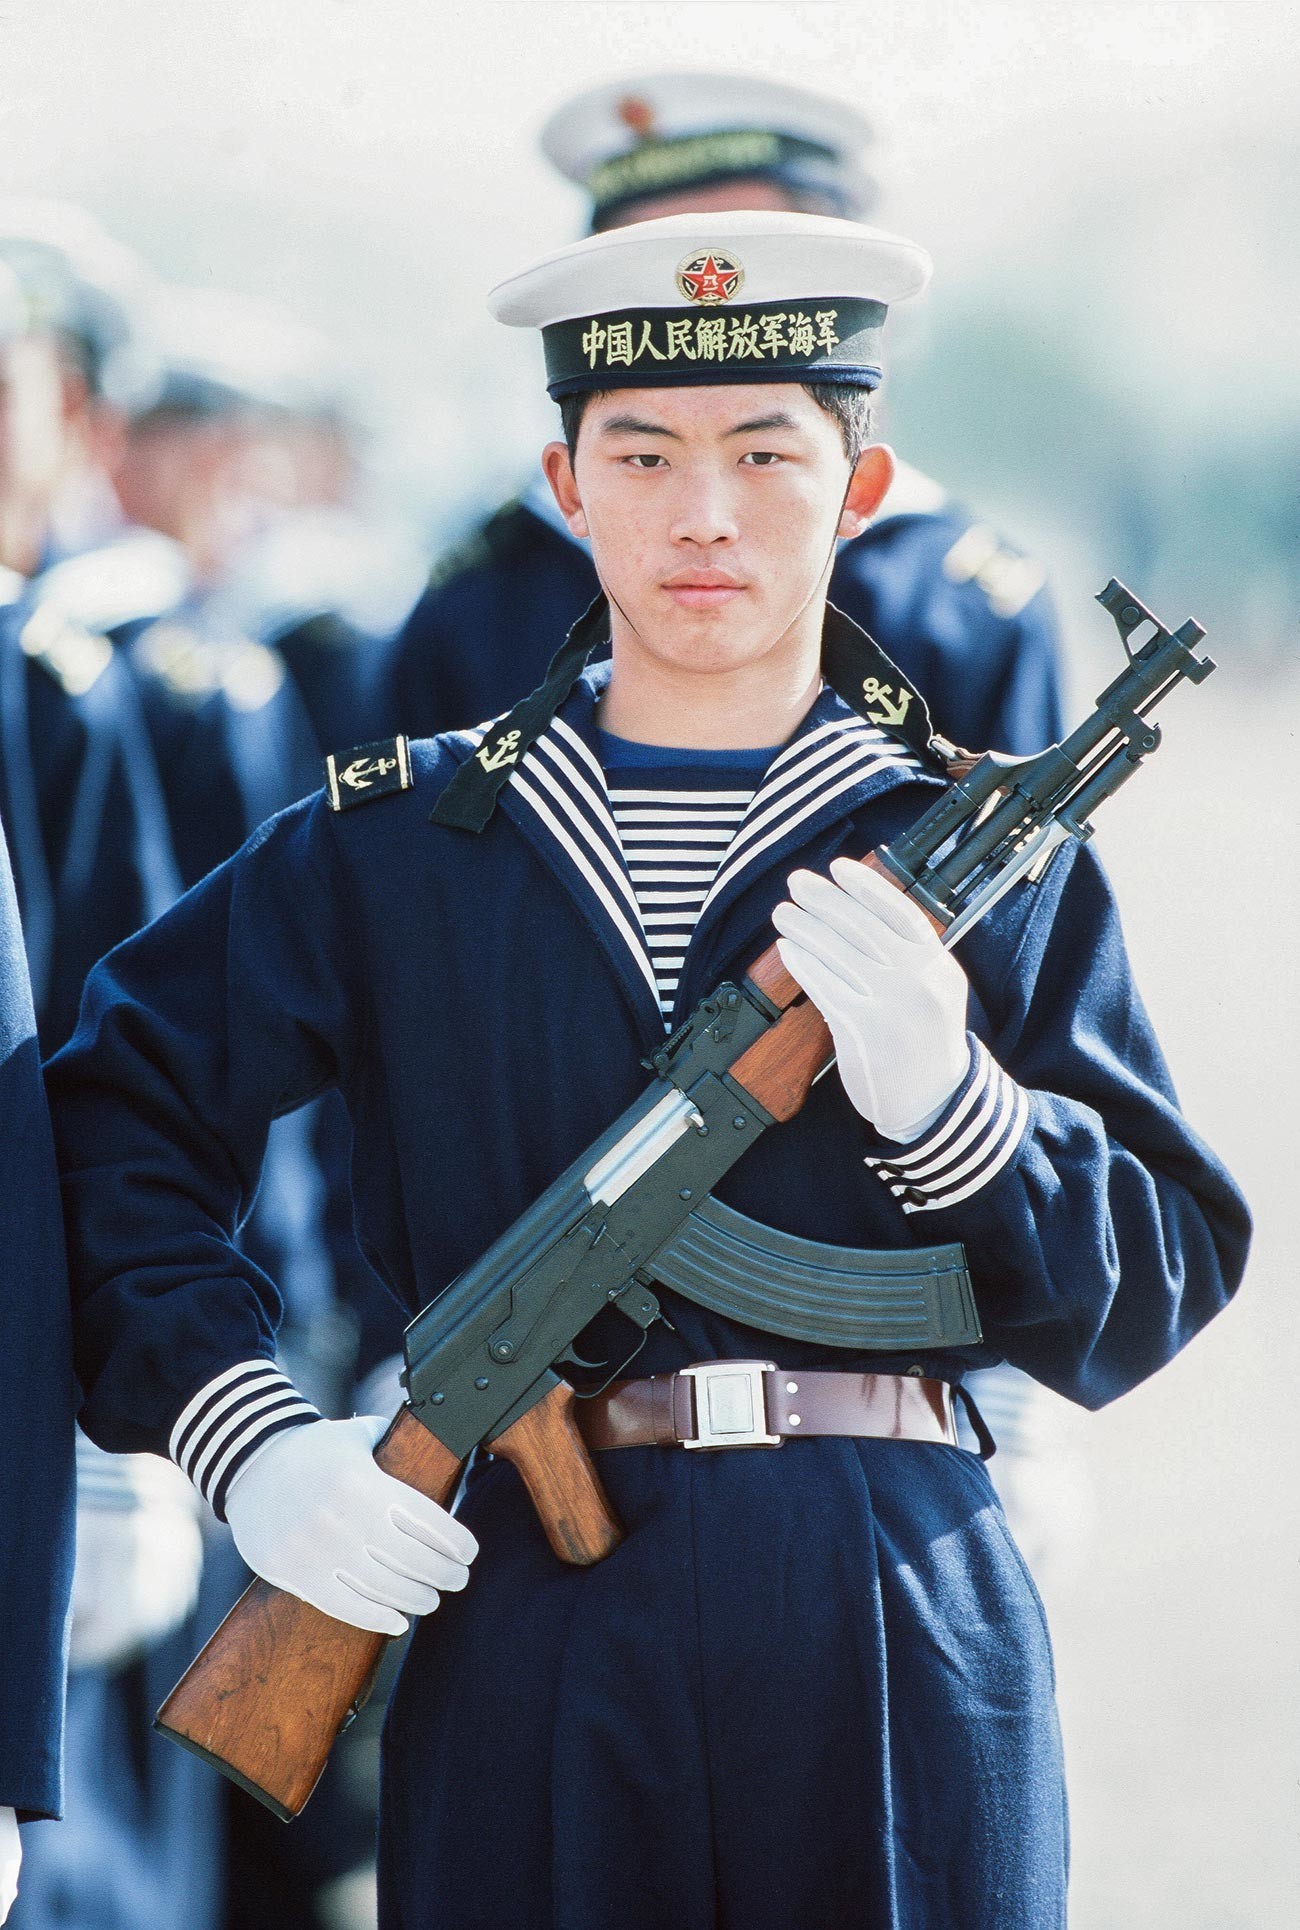 Fuzileiro naval chinês com 